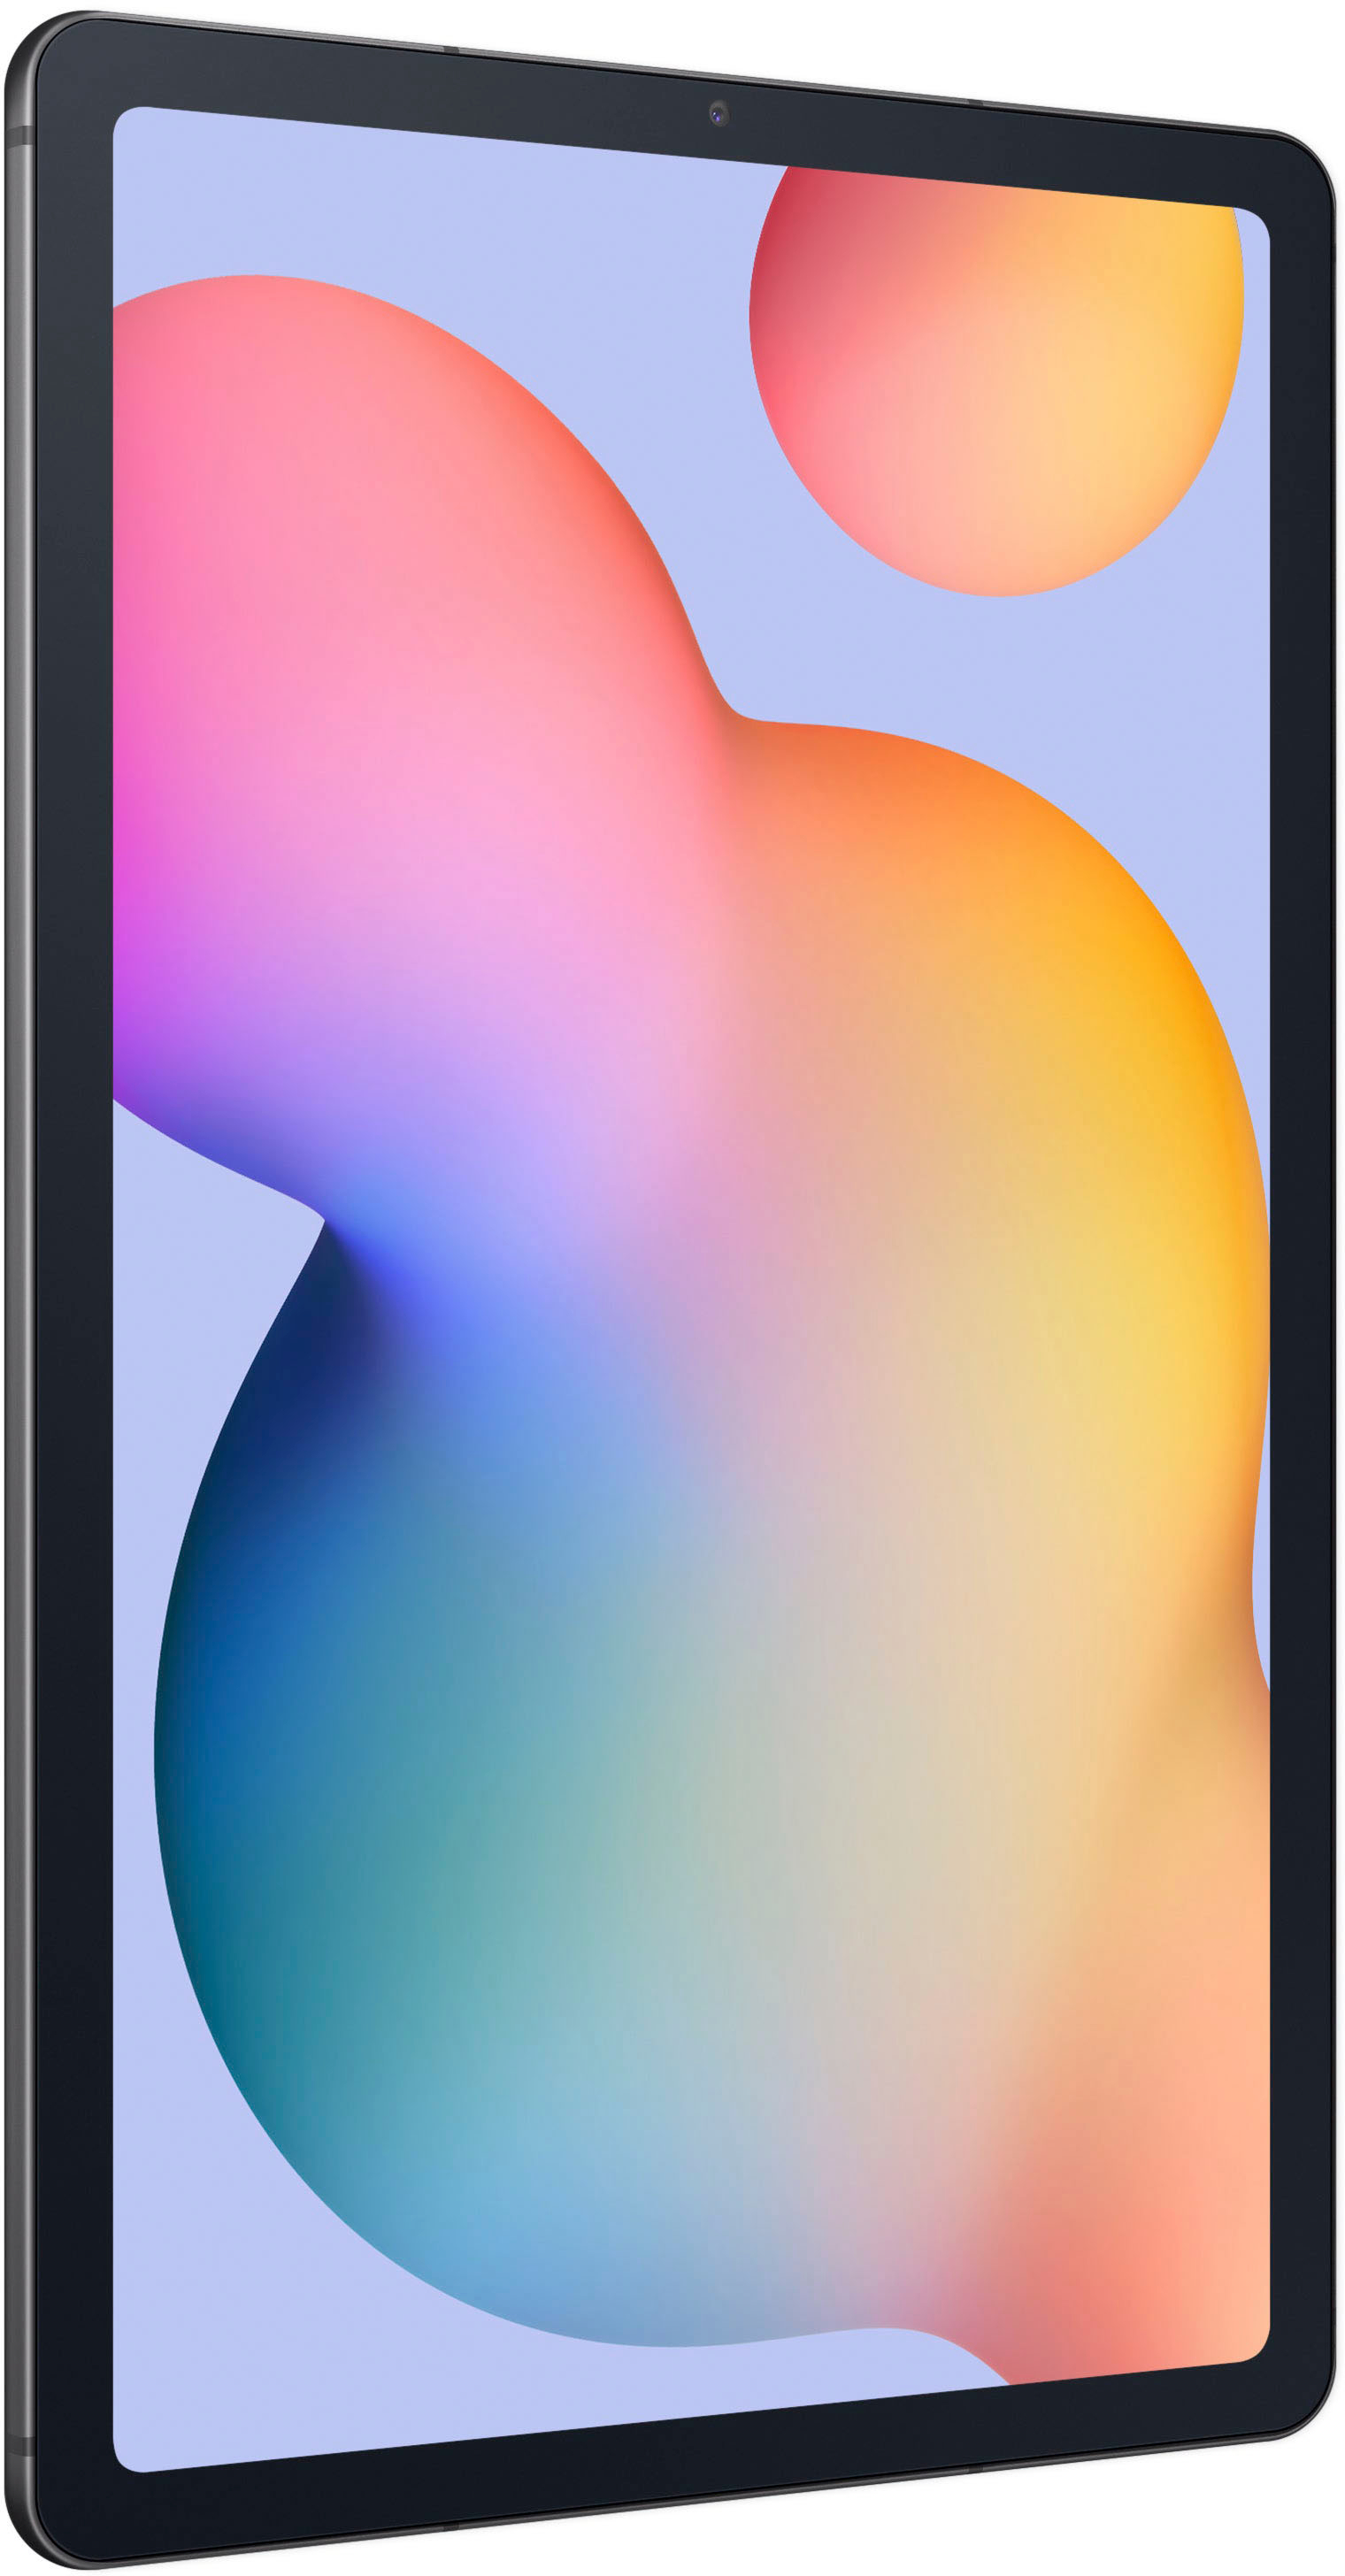 Samsung Galaxy Tab S6 Lite (2022) SM-P613 64GB, Wi-Fi, 10.4 - Oxford Gray  for sale online